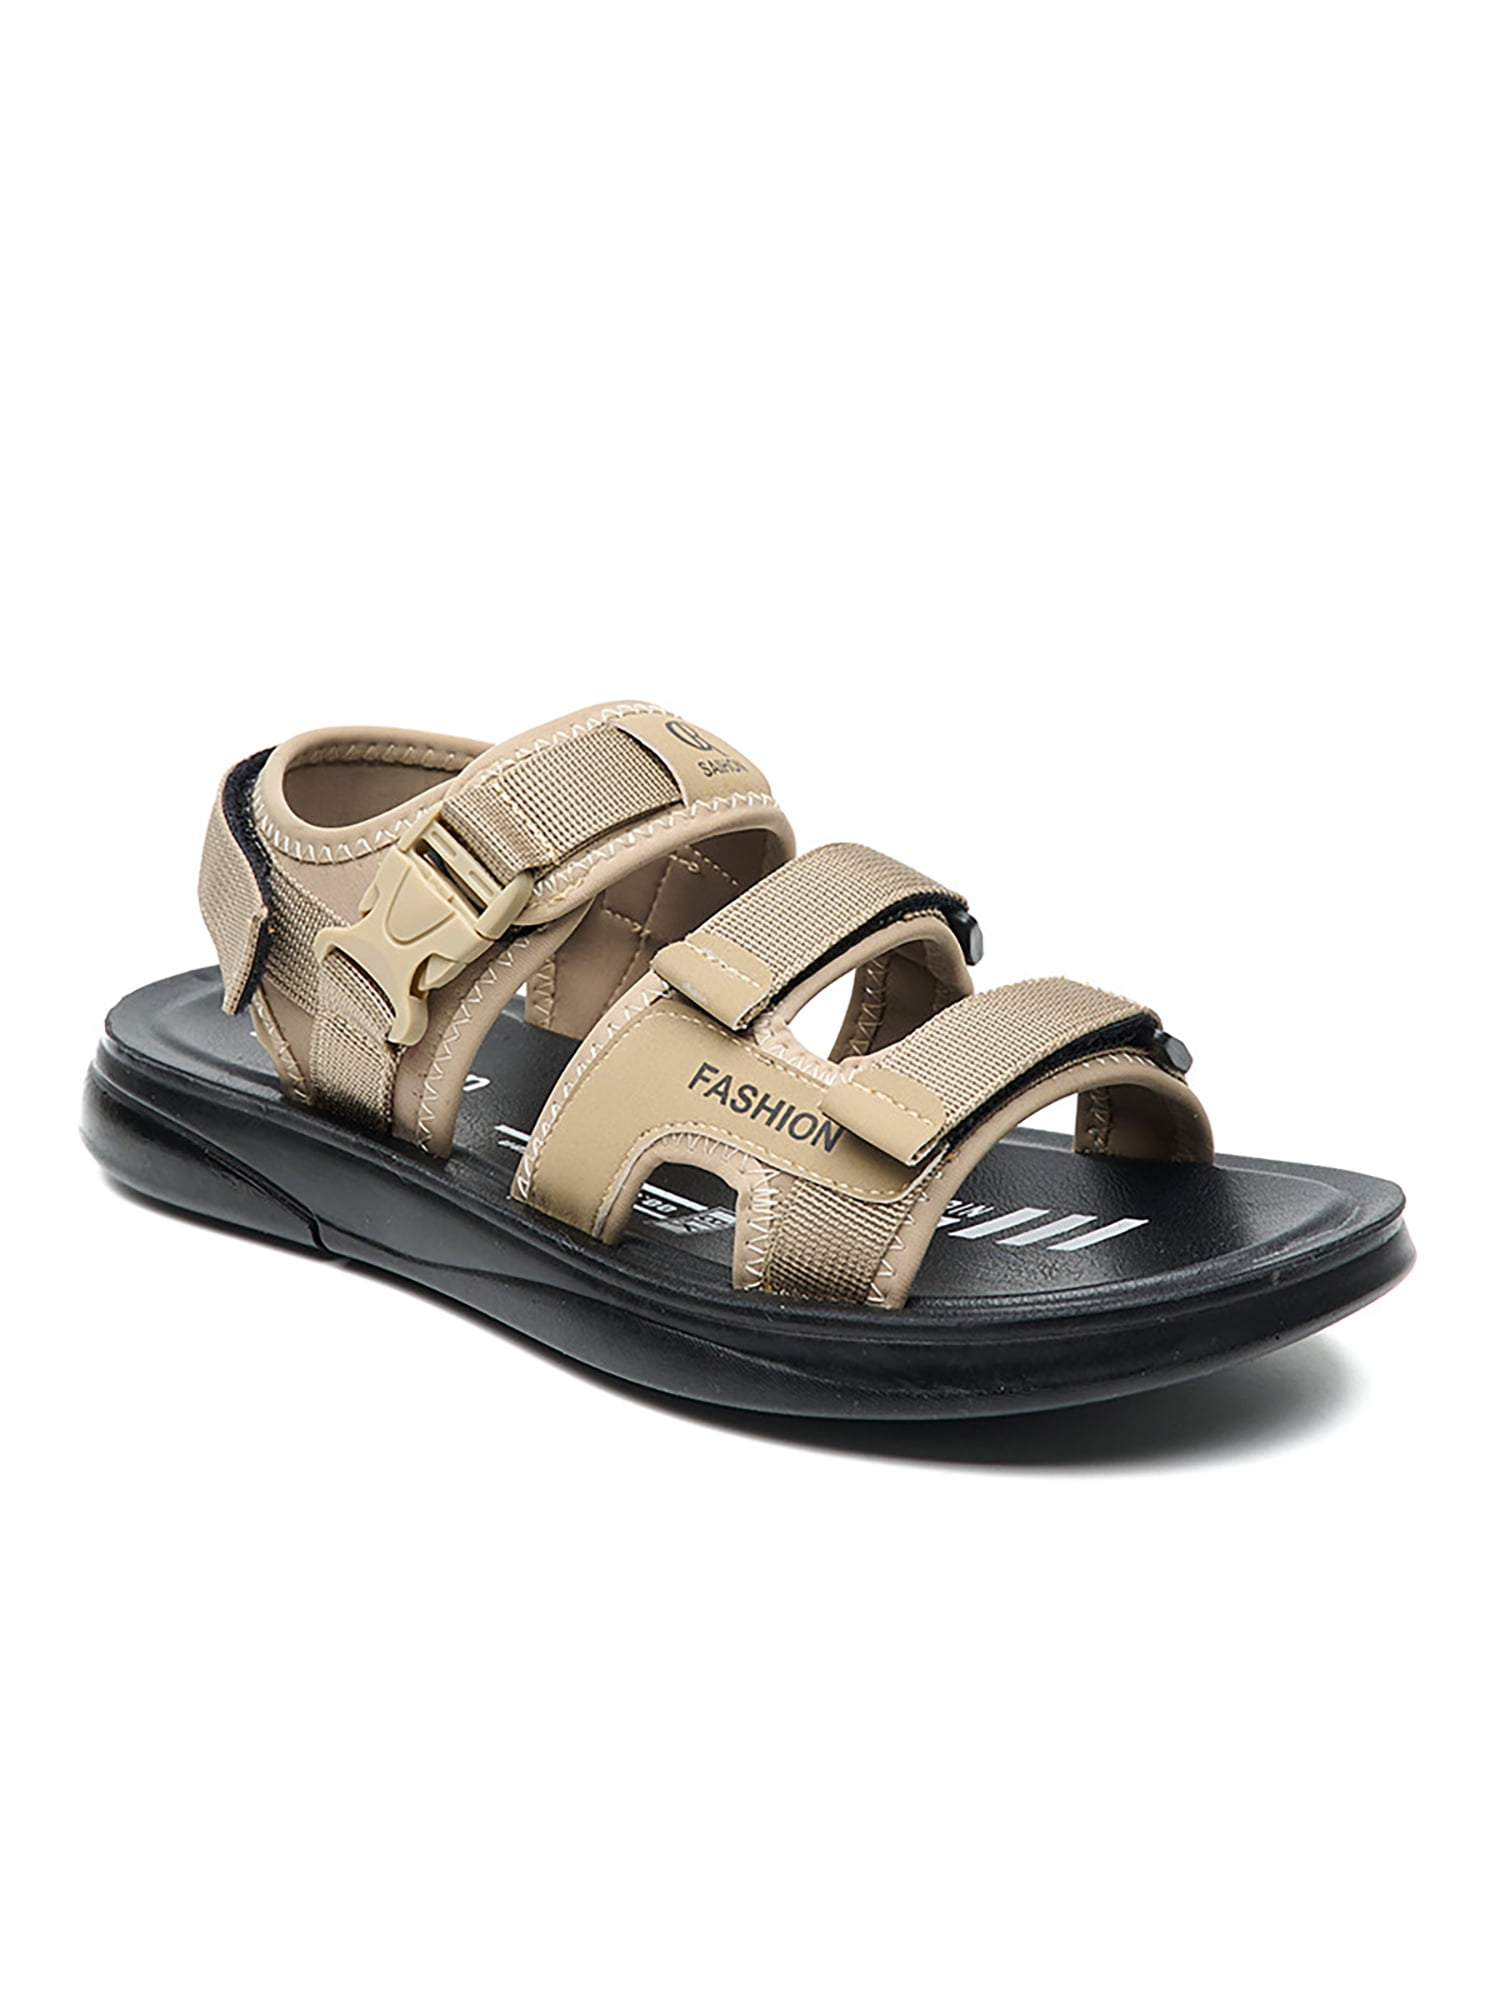 Rockomi Men's Flat Sandals Ankle Strap Slide Sandal Casual Beach Shoes ...